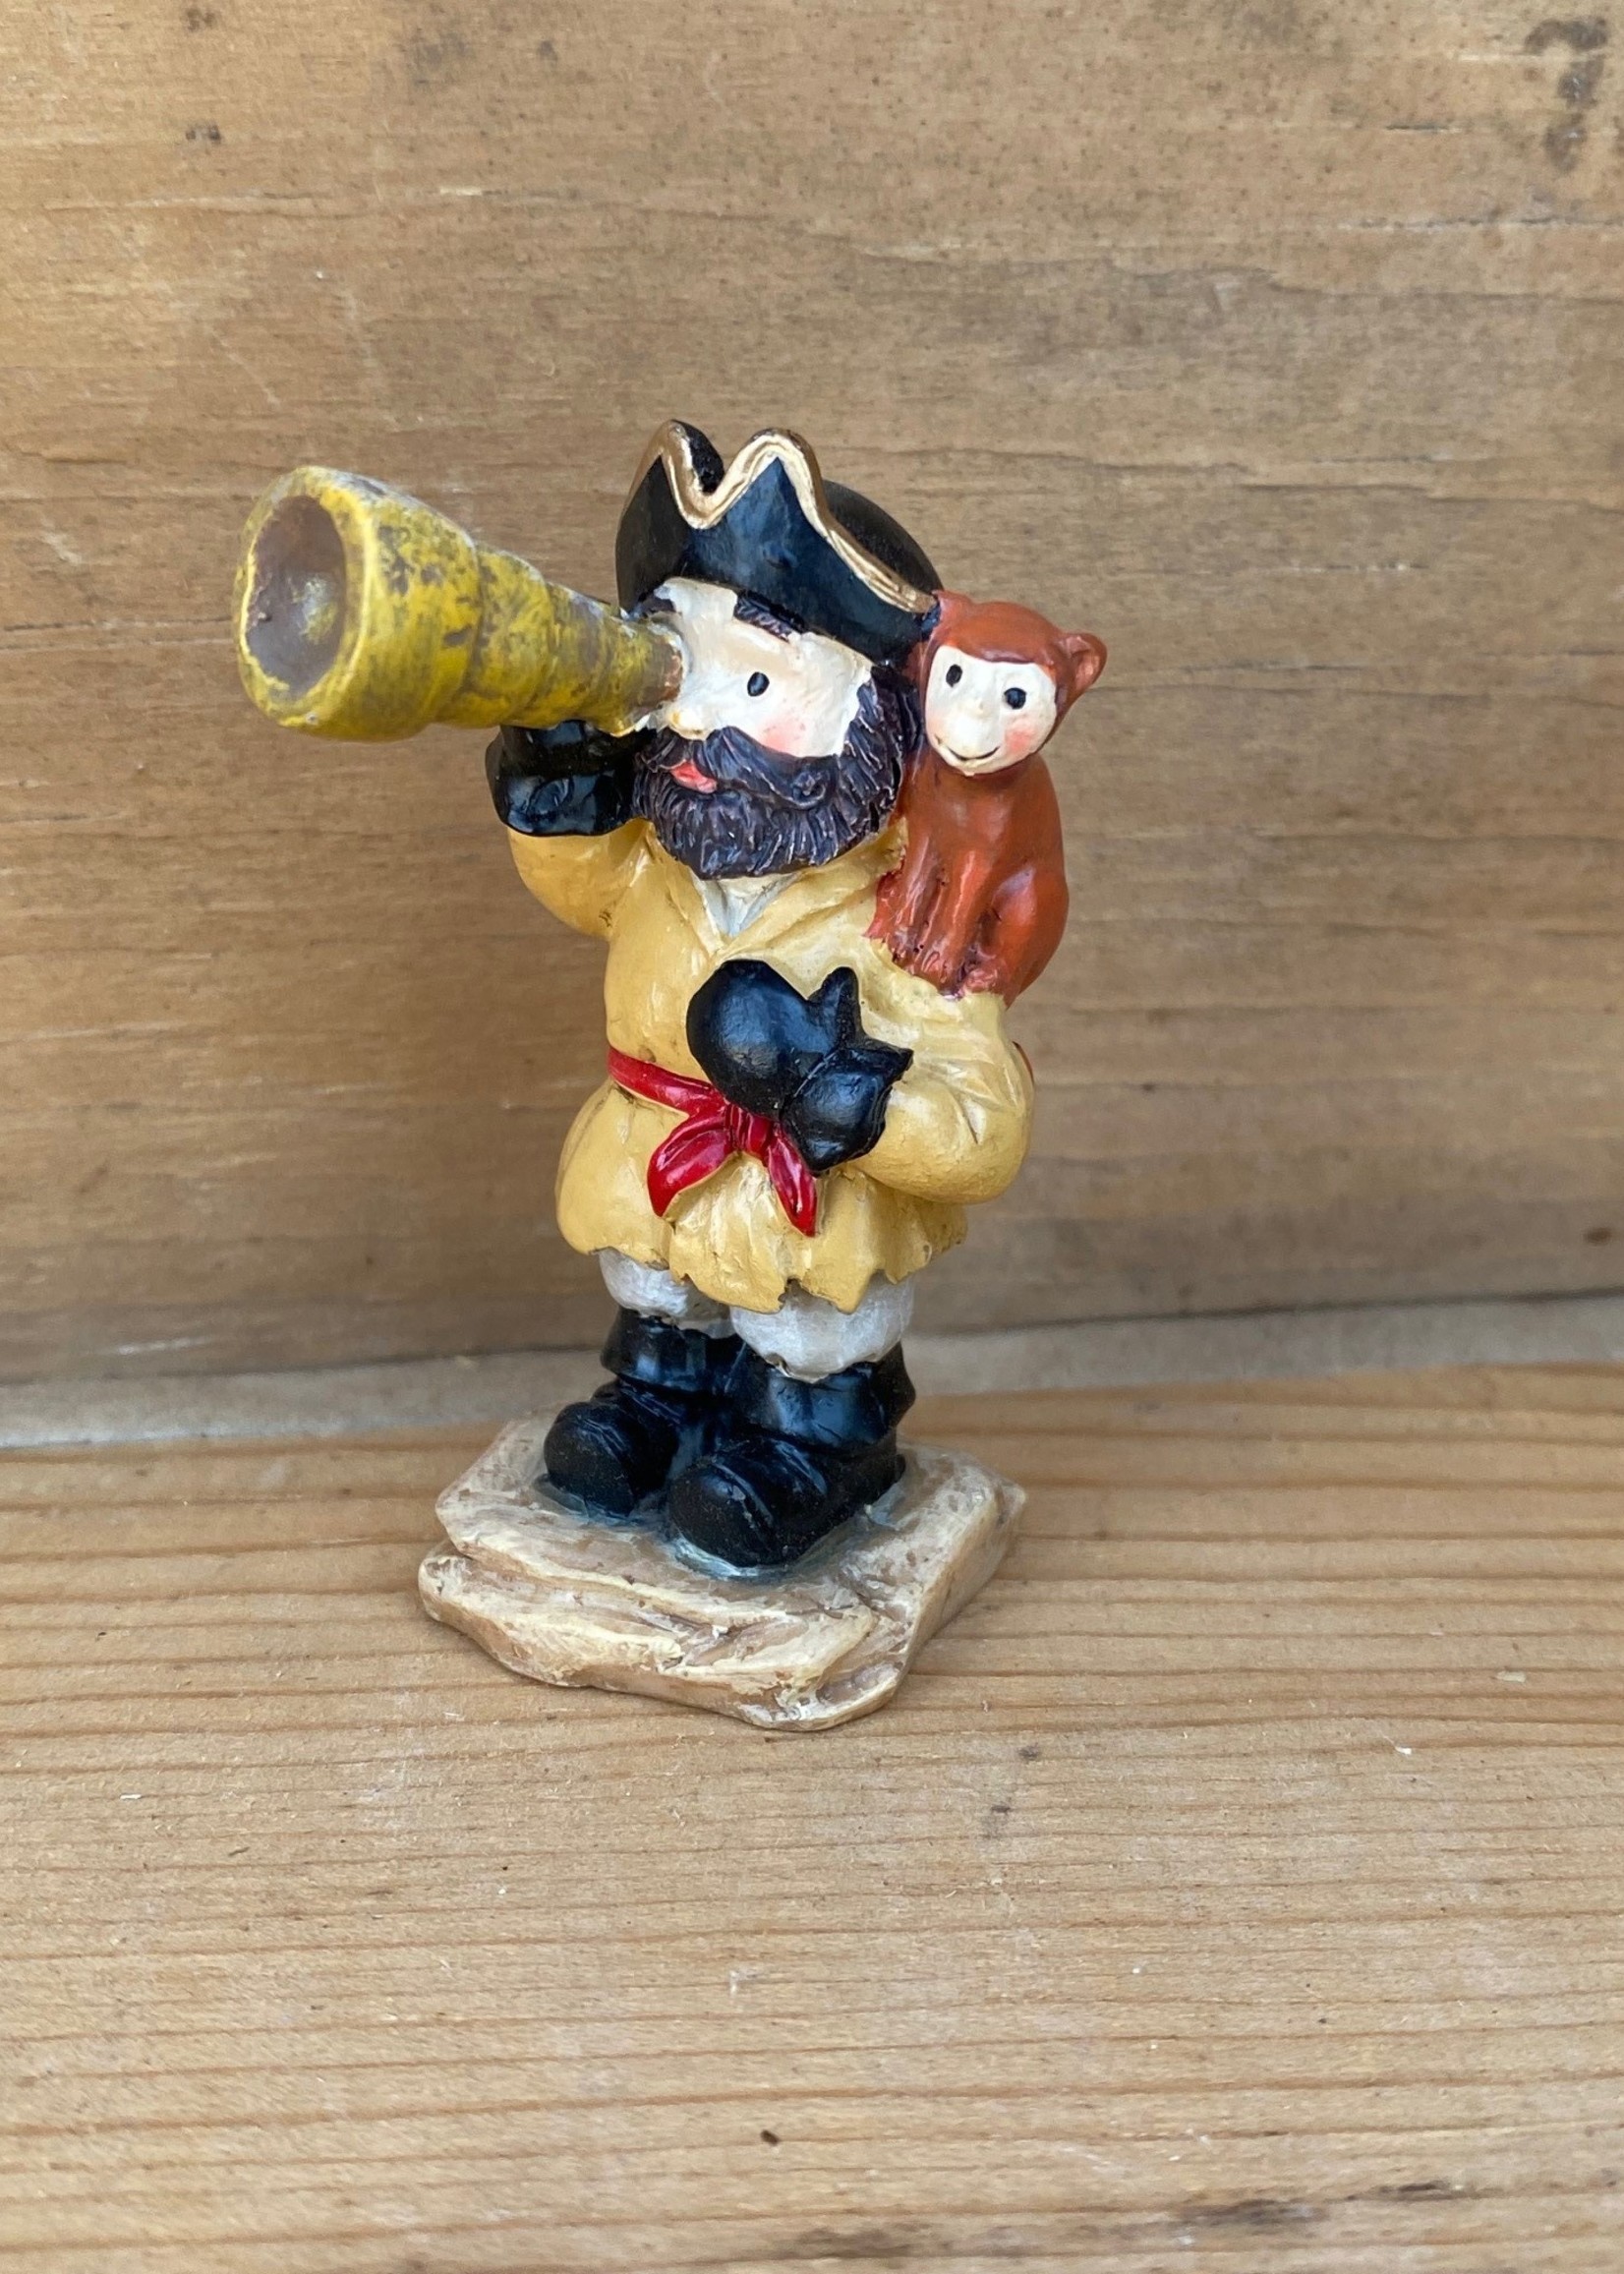 Miniature Pirate Spy Glass and Monkey